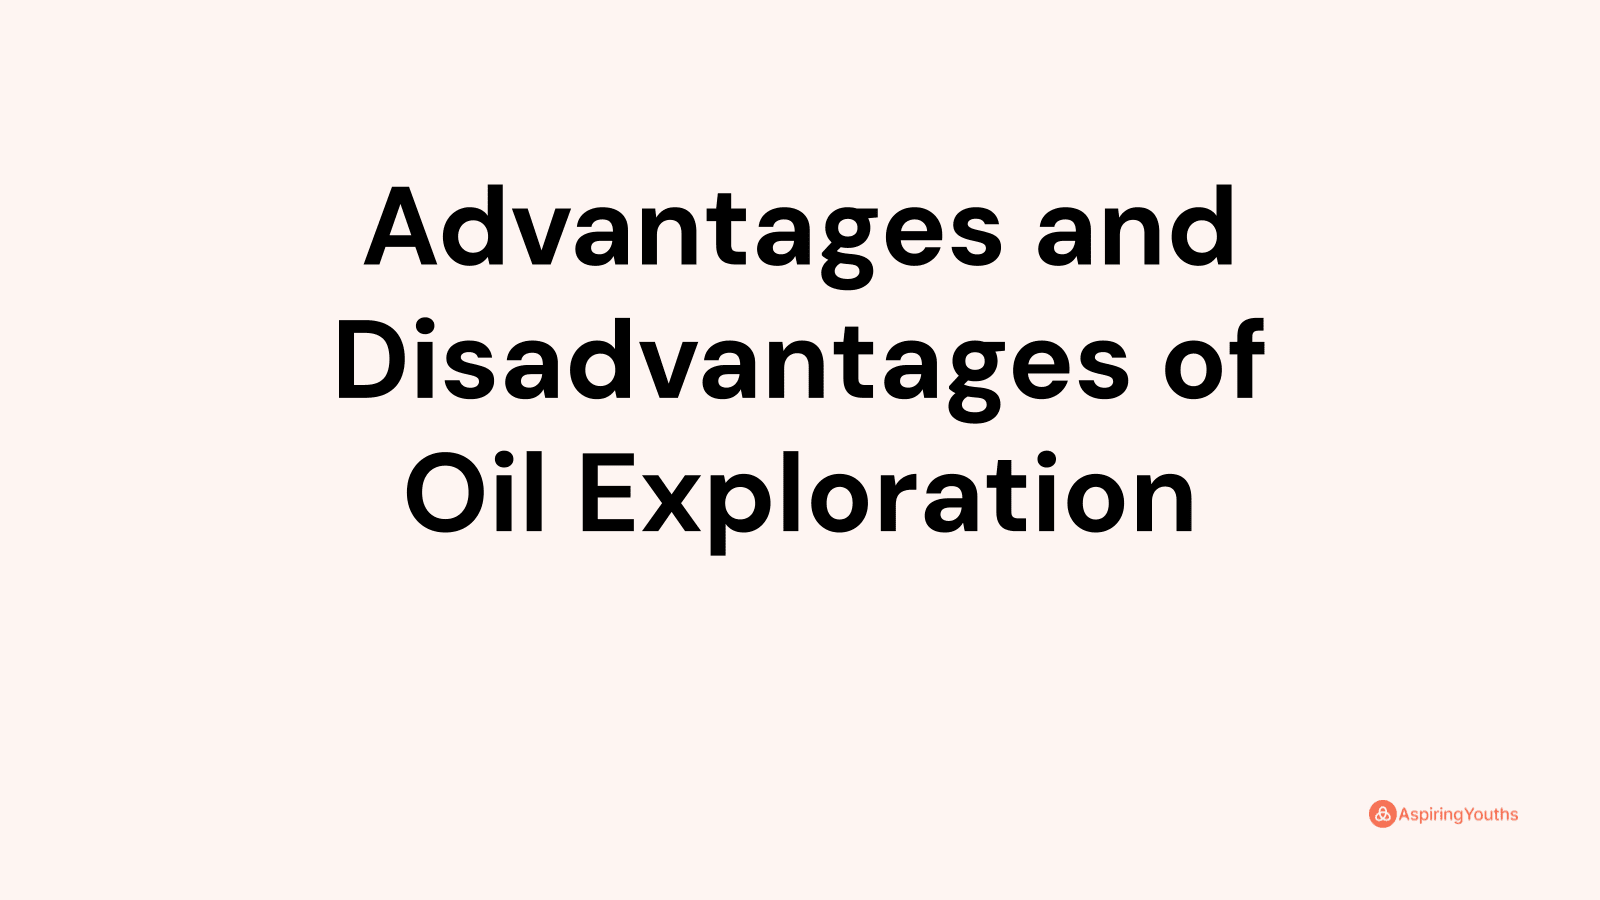 Advantages and disadvantages of Oil Exploration